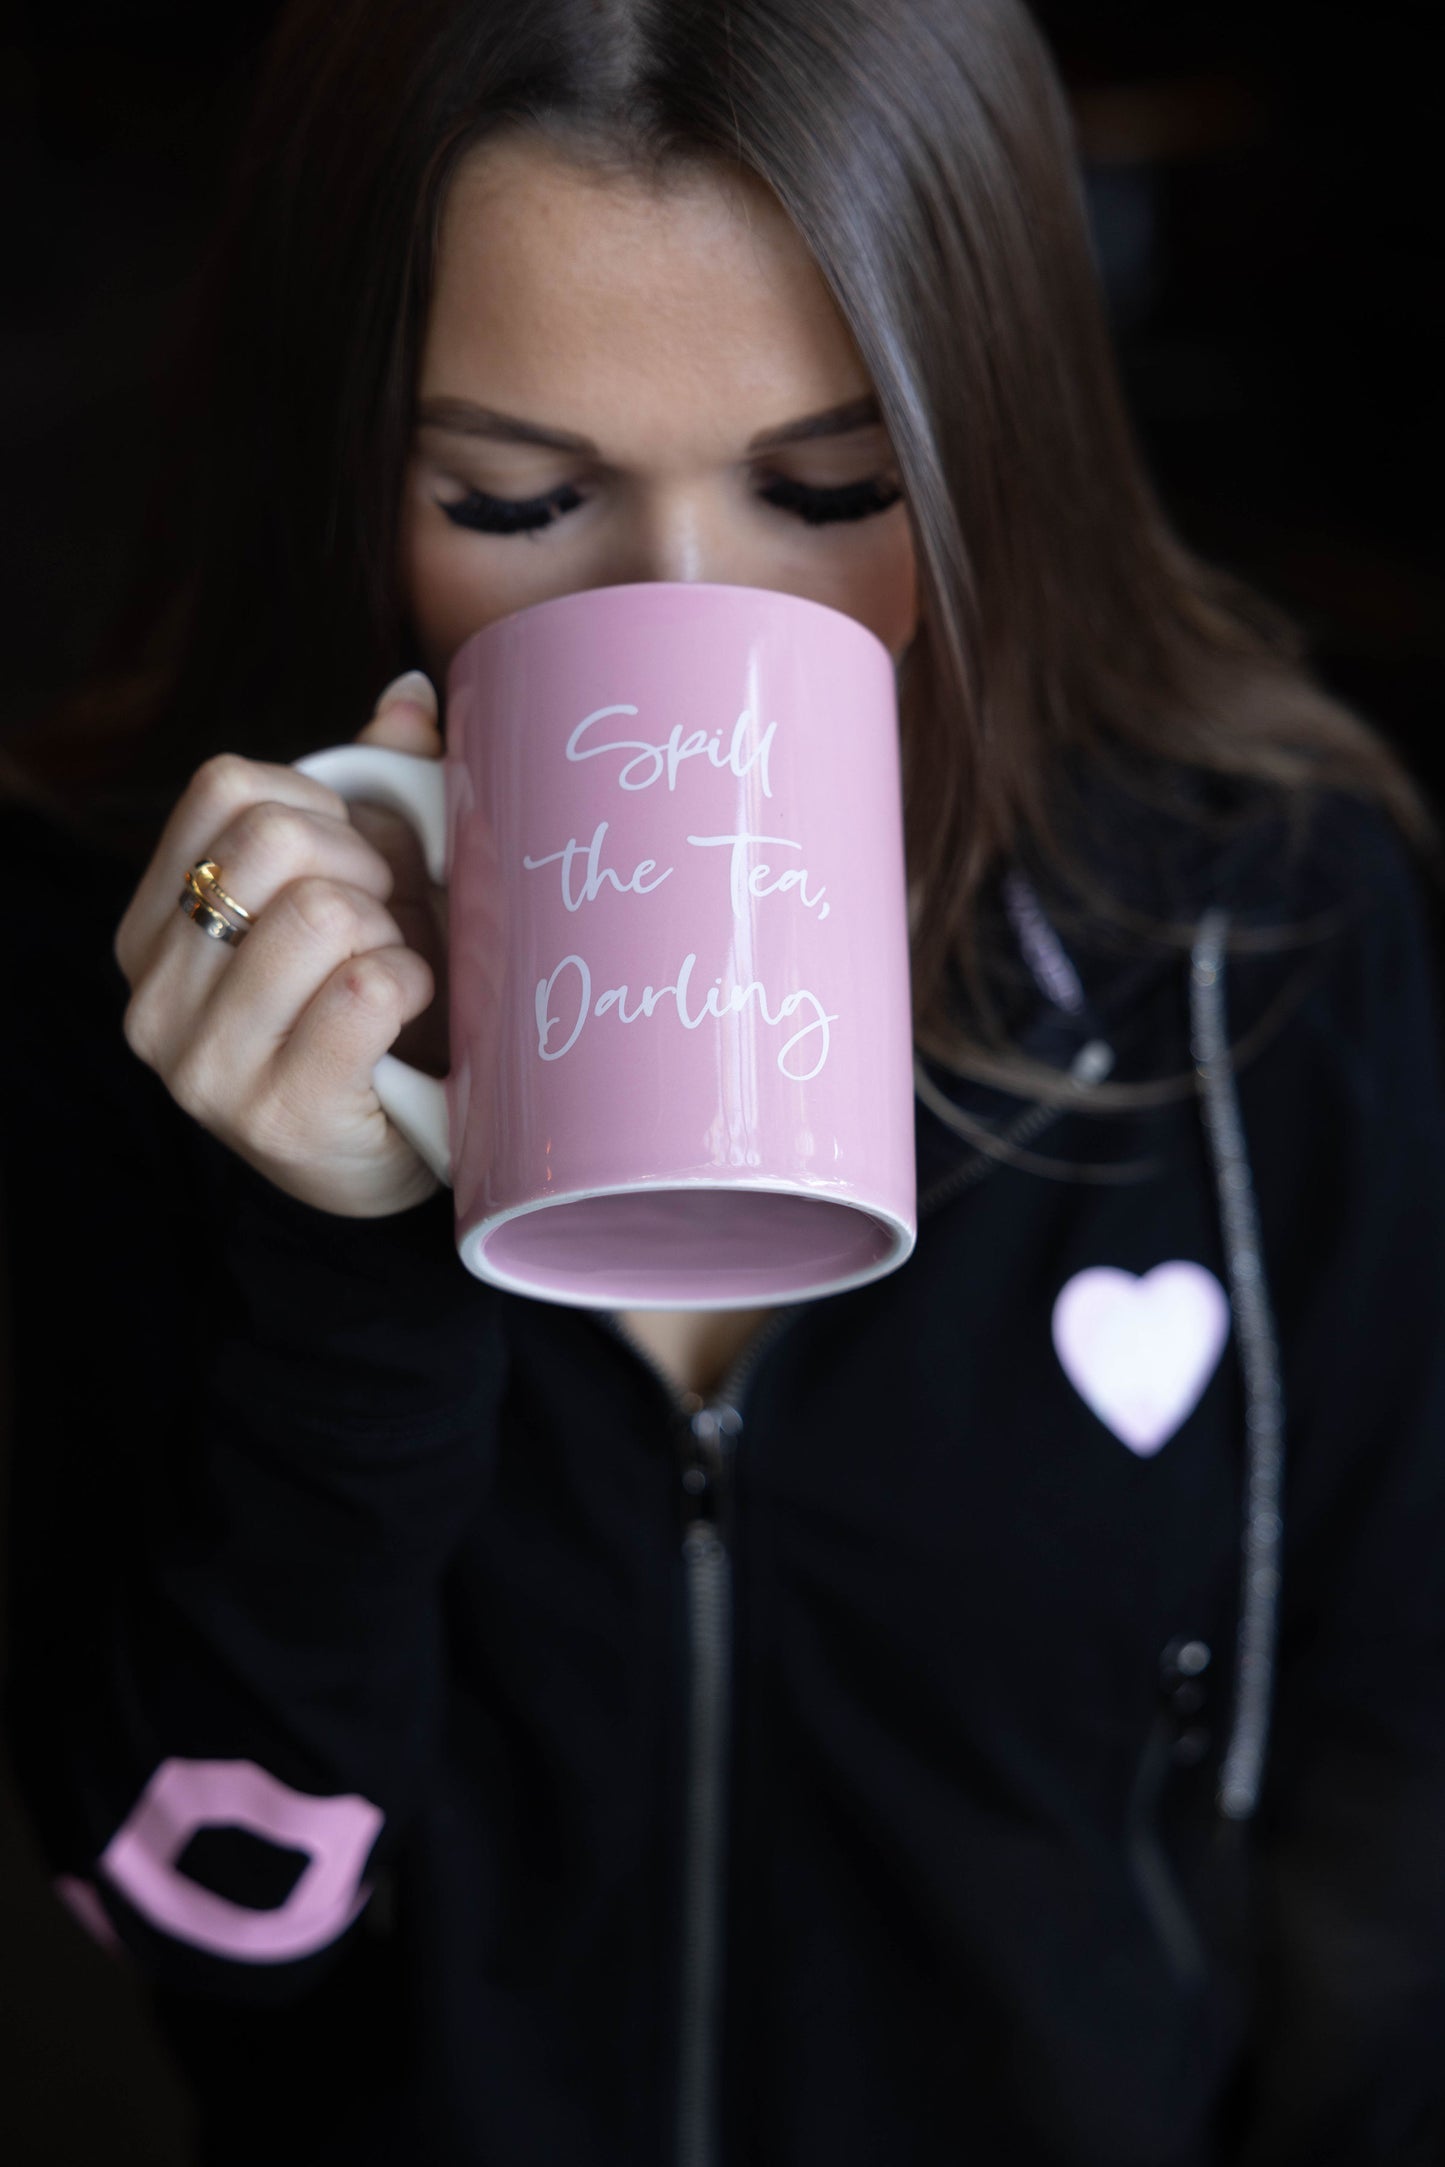 "Spill the Tea, Darling" Mug